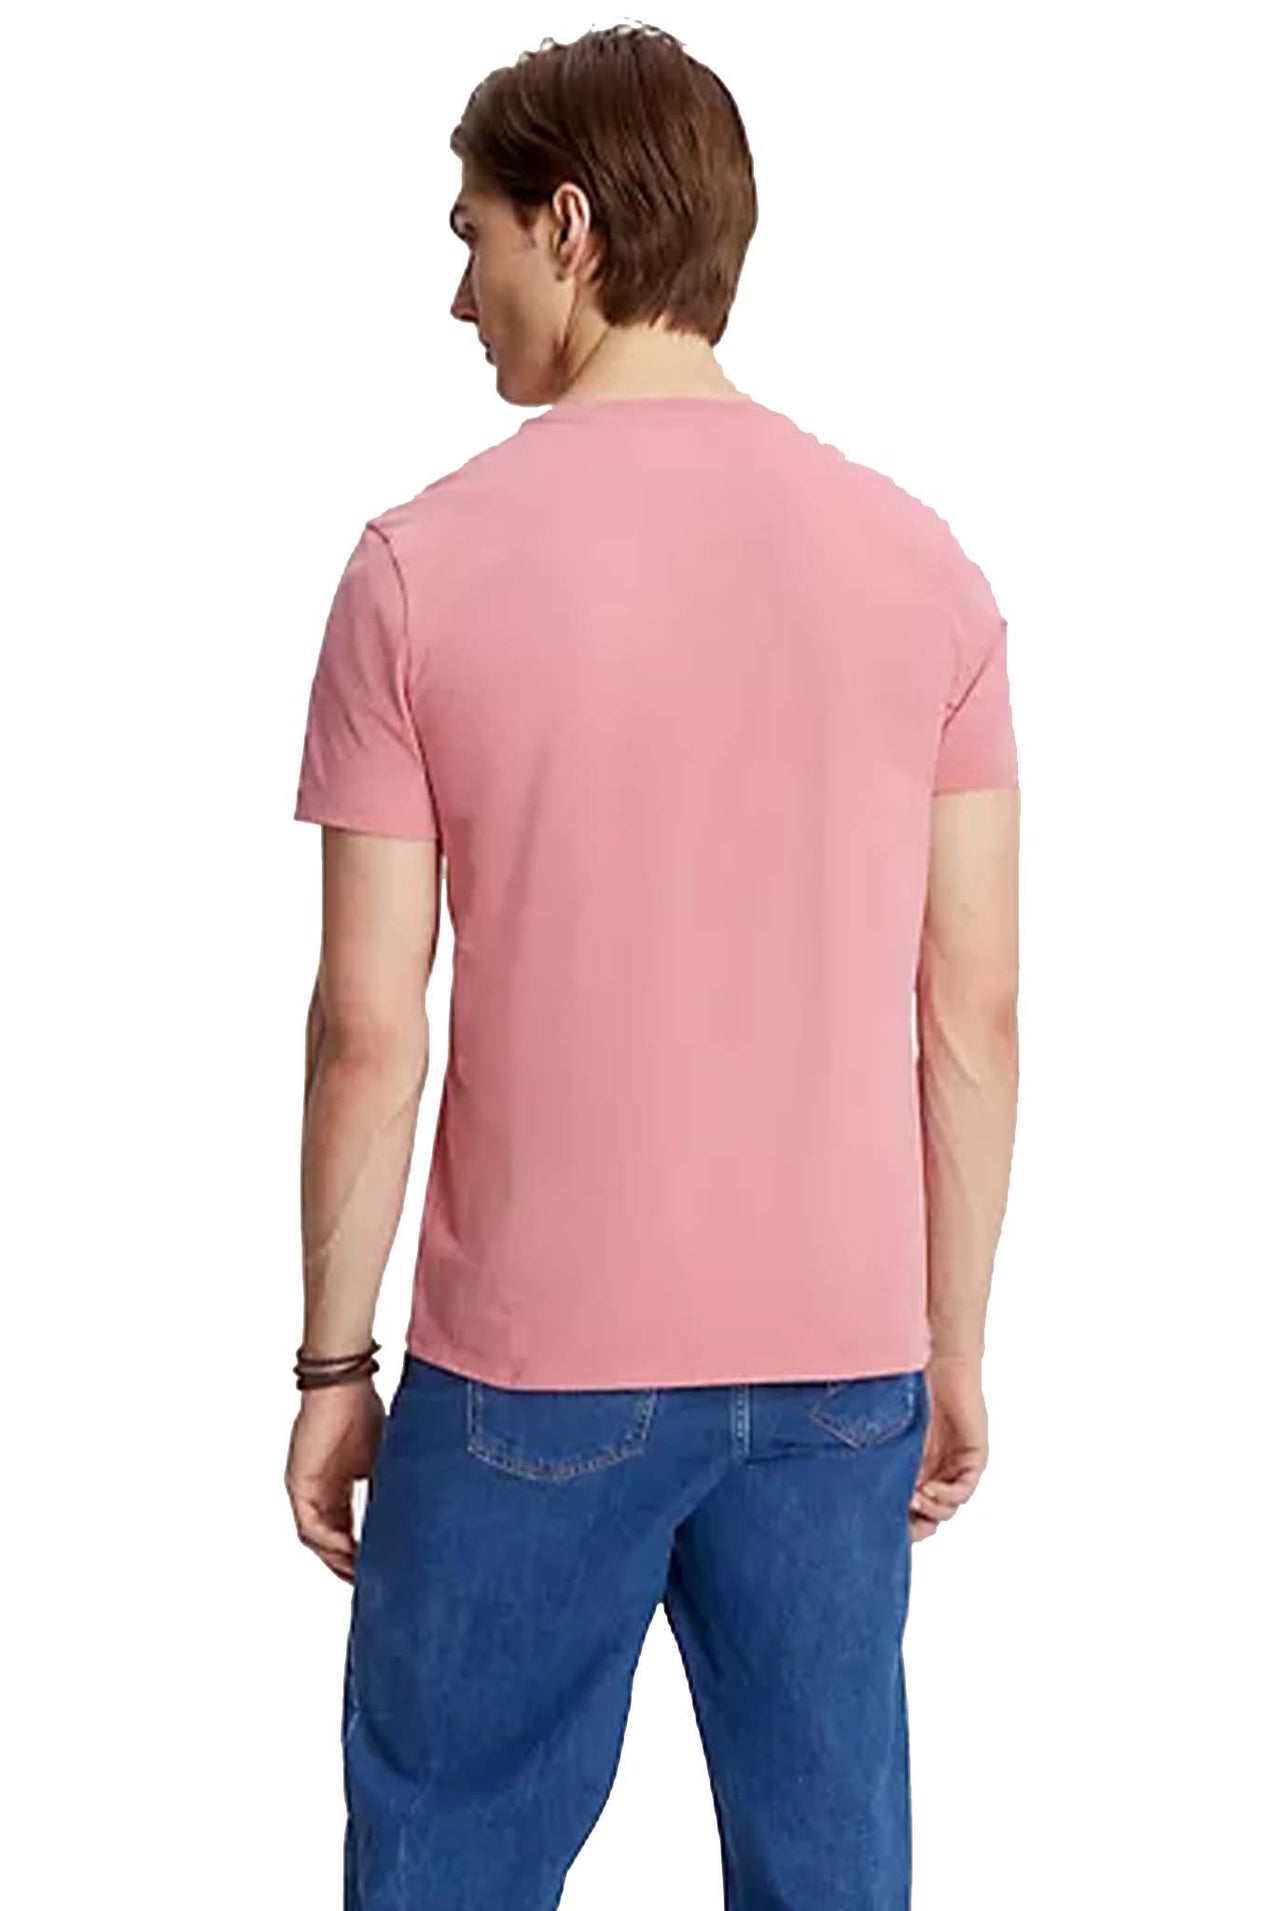 Camiseta Tommy Hilfiger Essential Solid Pink Blossom